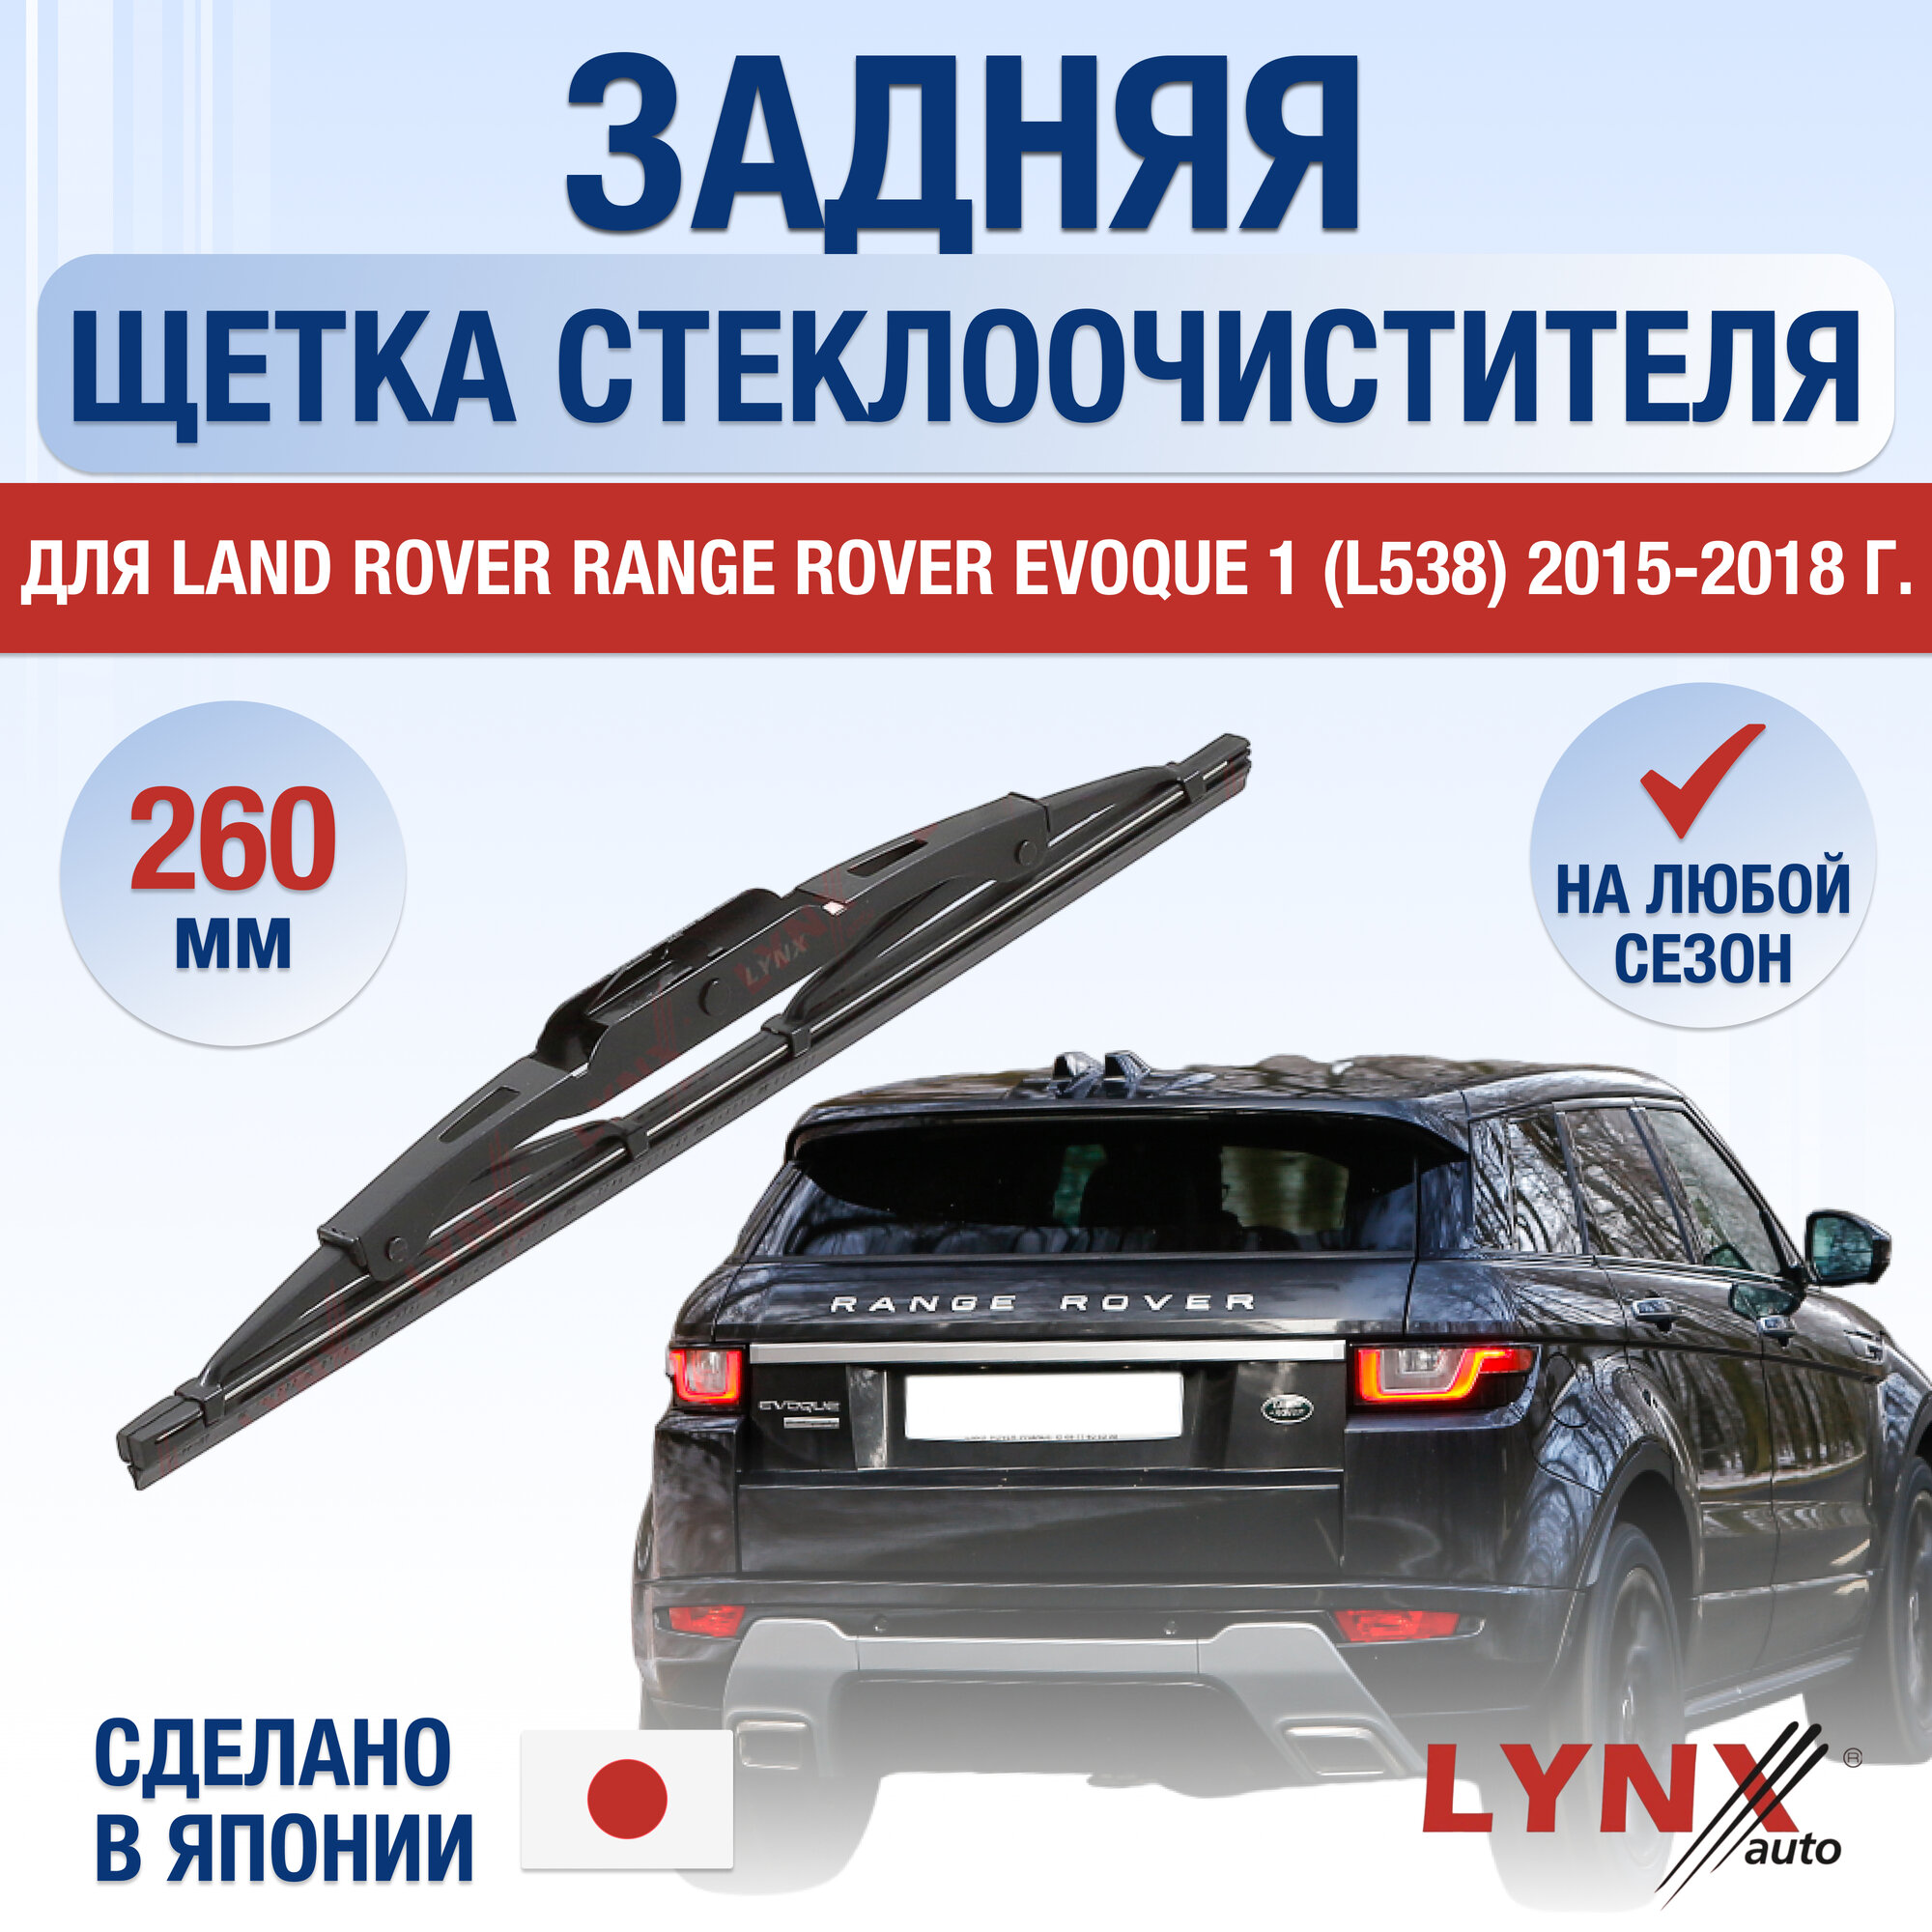 Задняя щетка стеклоочистителя для Land Rover Range Rover Evoque (1) L538 / 2015 2016 2017 2018 / Задний дворник 260 мм Ленд Ровер Рендж Ровер Эвок